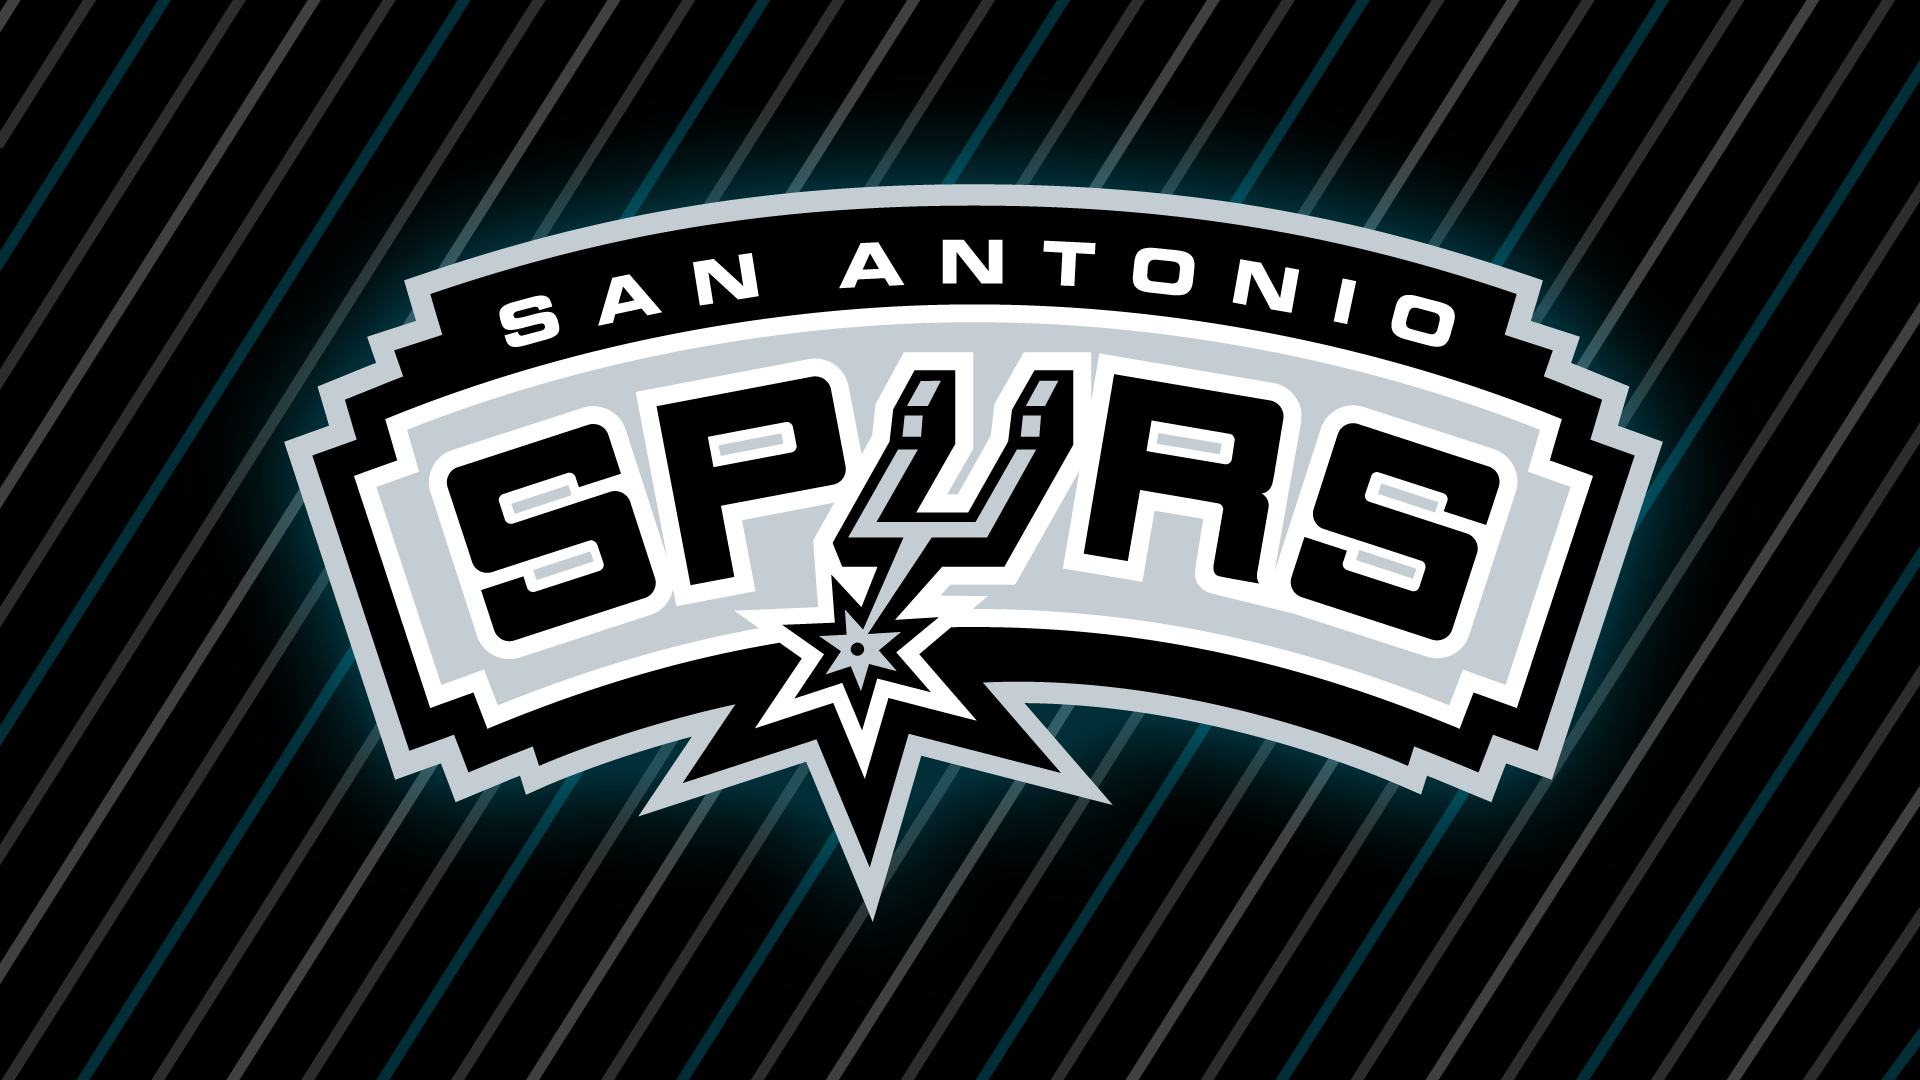 [49+] San Antonio Spurs Schedule Wallpaper on WallpaperSafari